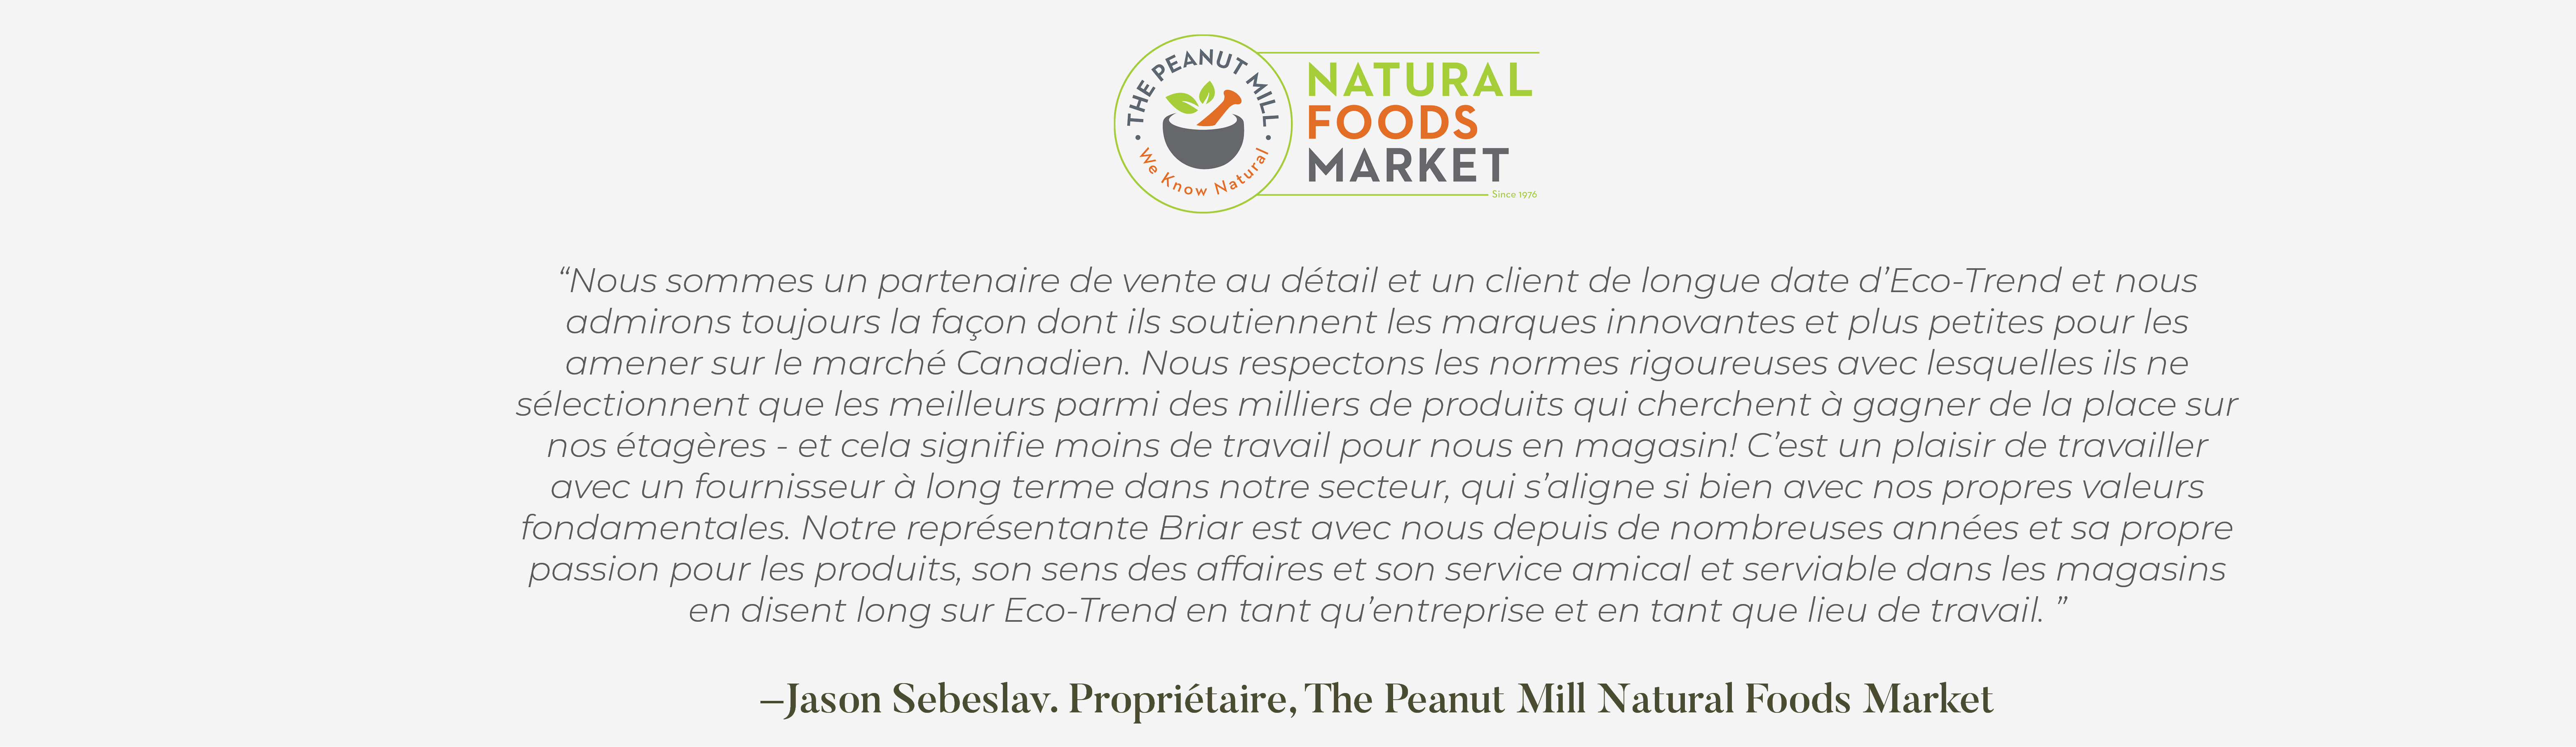 Jason Sebeslav of Natural Foods Market testimonial